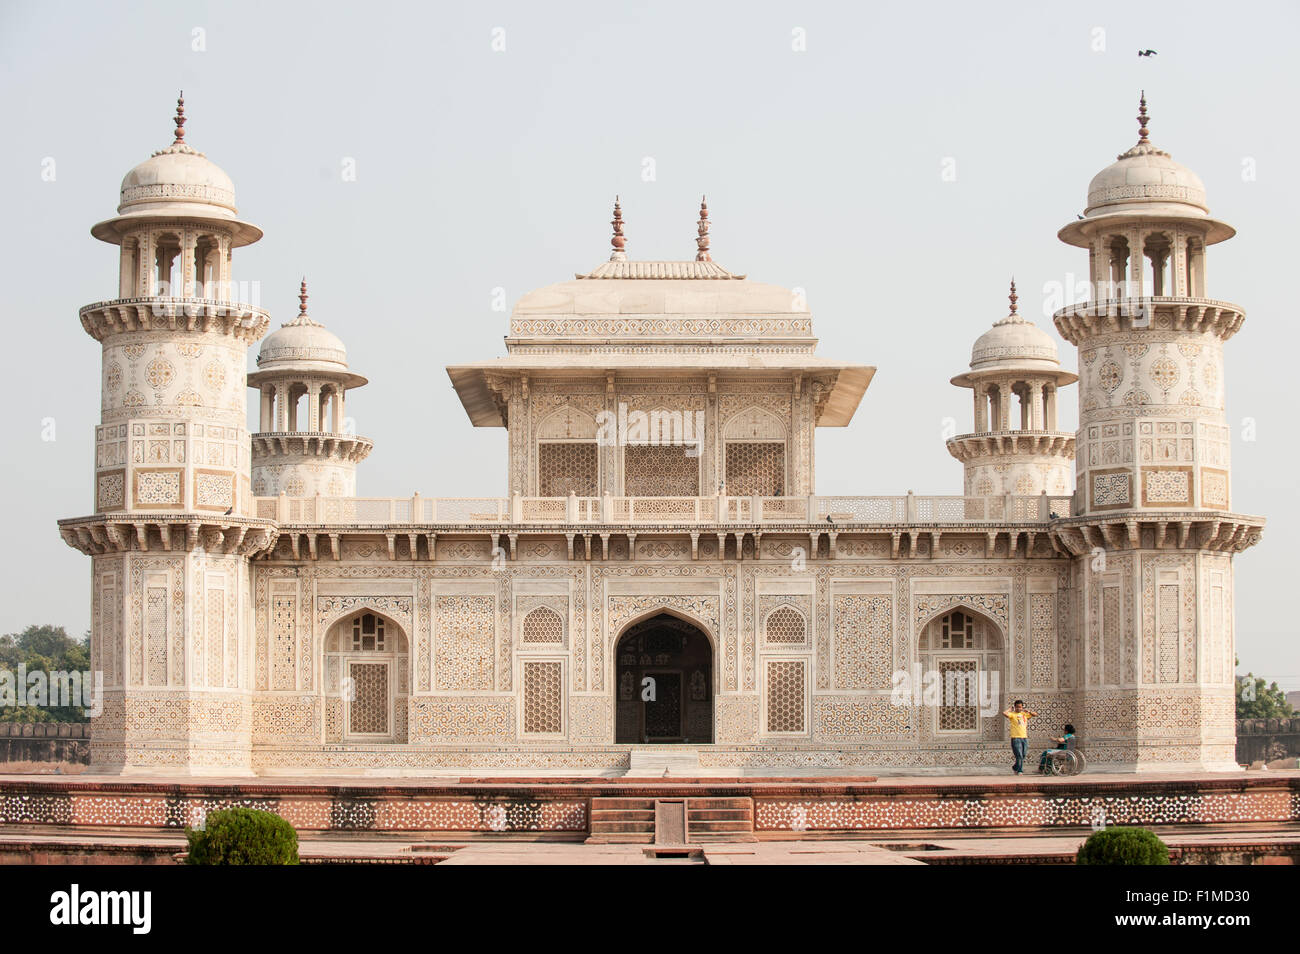 Agra, Utar Pradesh, India. Baby Taj. Breathtaking architecture with finely detailed parchin kari semi-precious stone inlay work and pierced lattice carved jali screens in white marble. Stock Photo